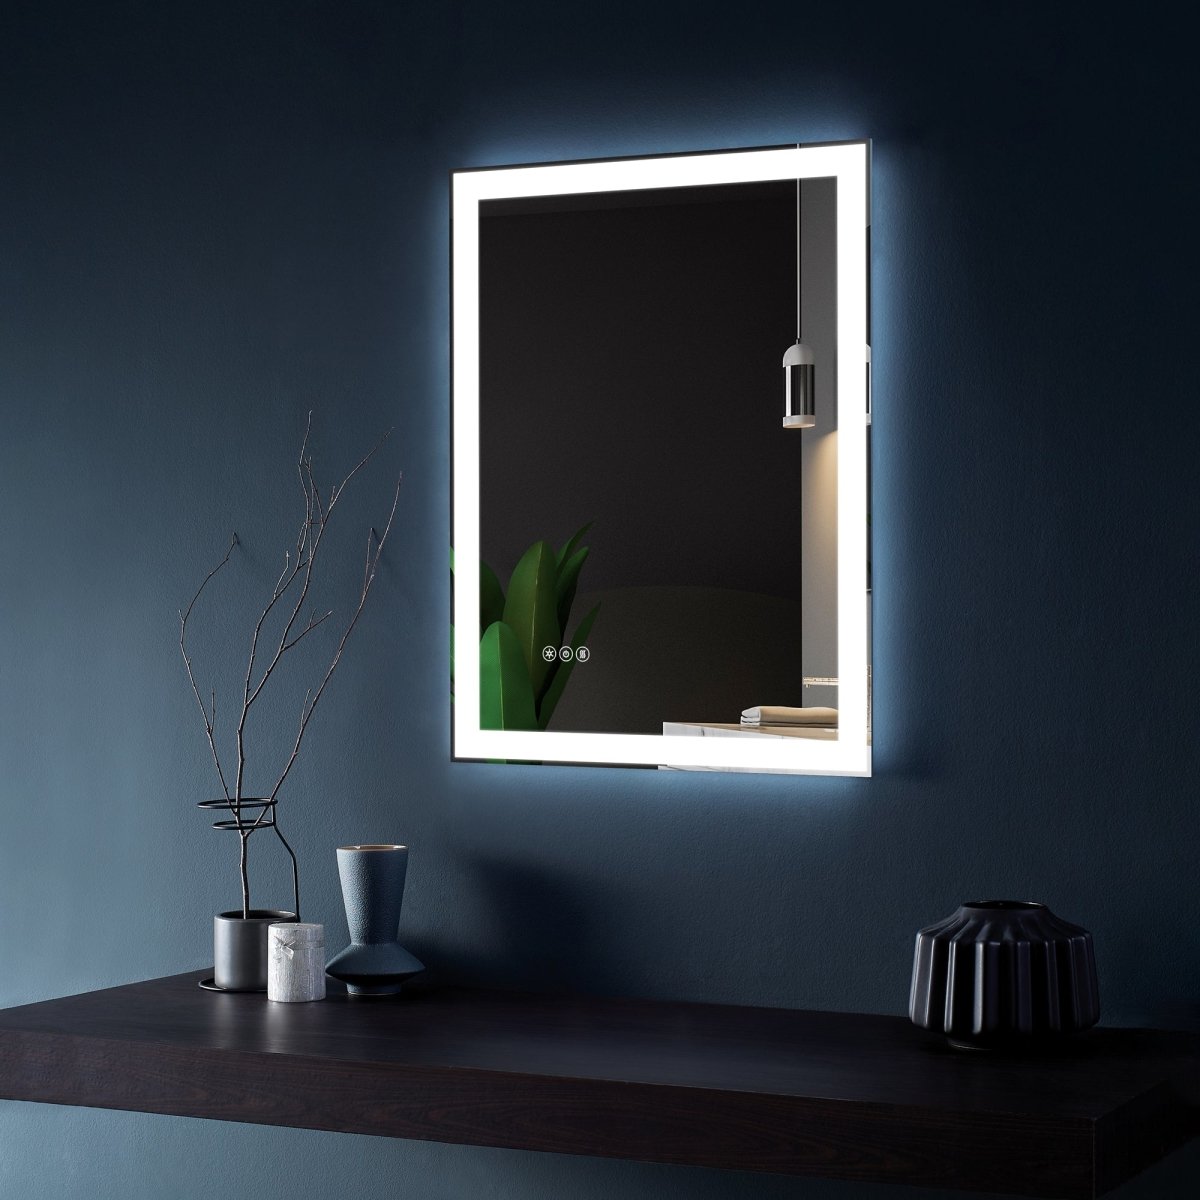 ExBrite 24" W x 32" H Bathroom LED Light Mirrors Anti- fog Mirrors